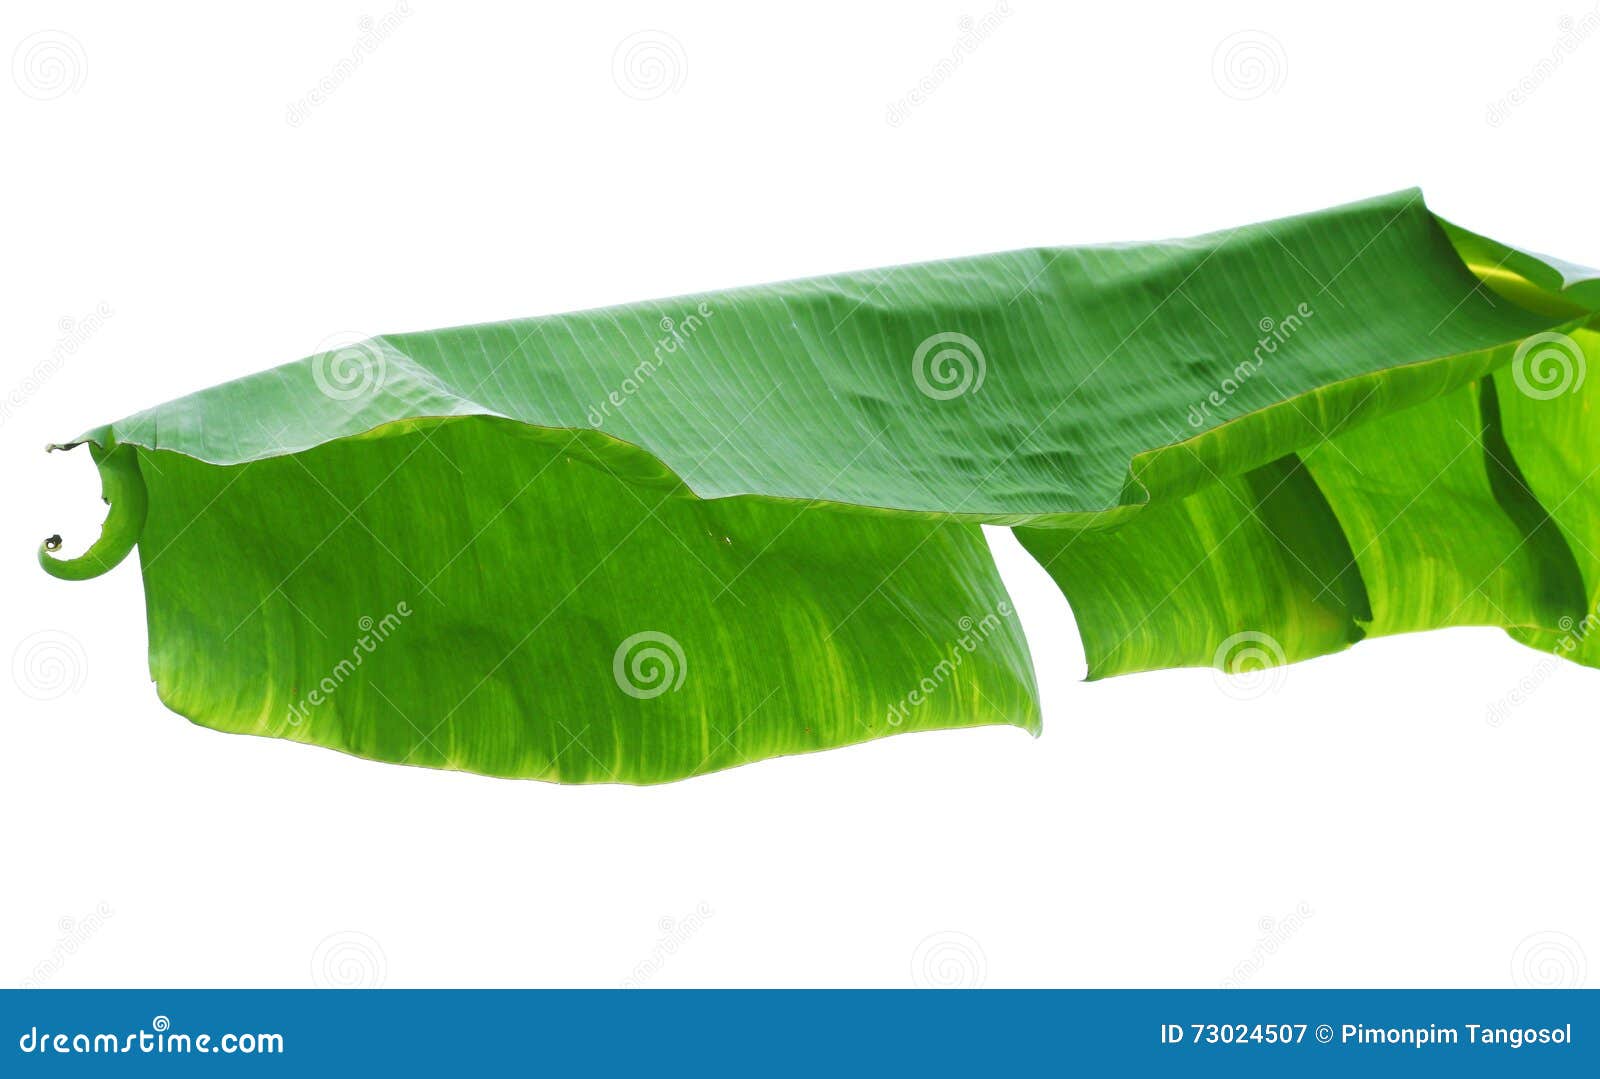 Banana leaves or banana tree. Banana leaves or banana tree isolated on white background